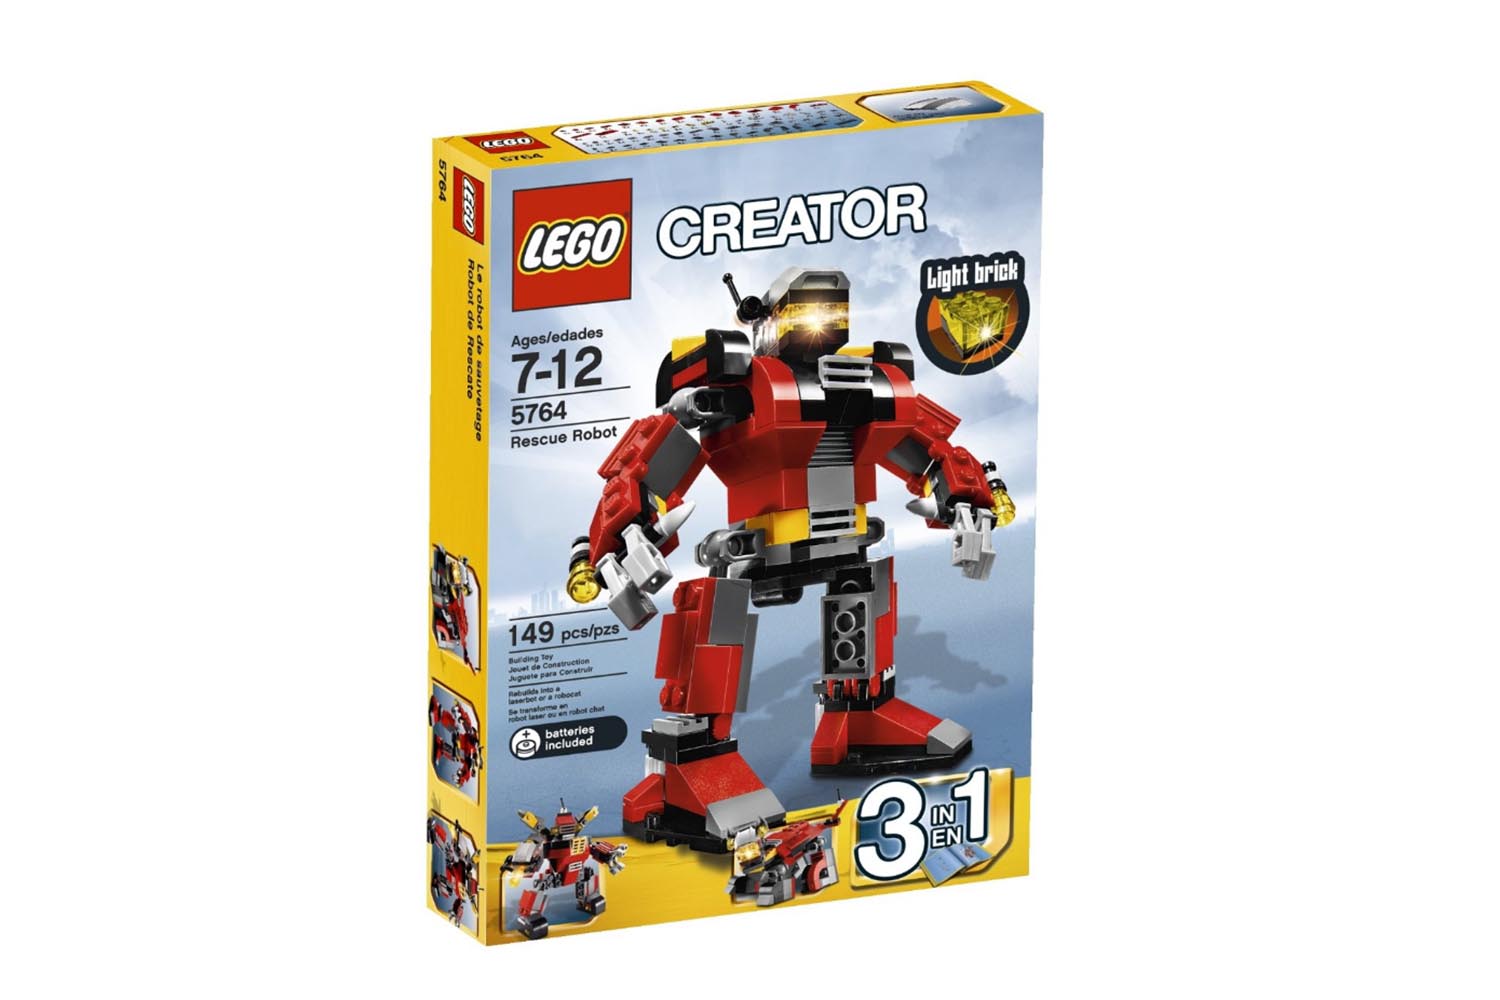 8. The LEGO Creator Rescue Robot 5764 Gets Kids Building Clapway